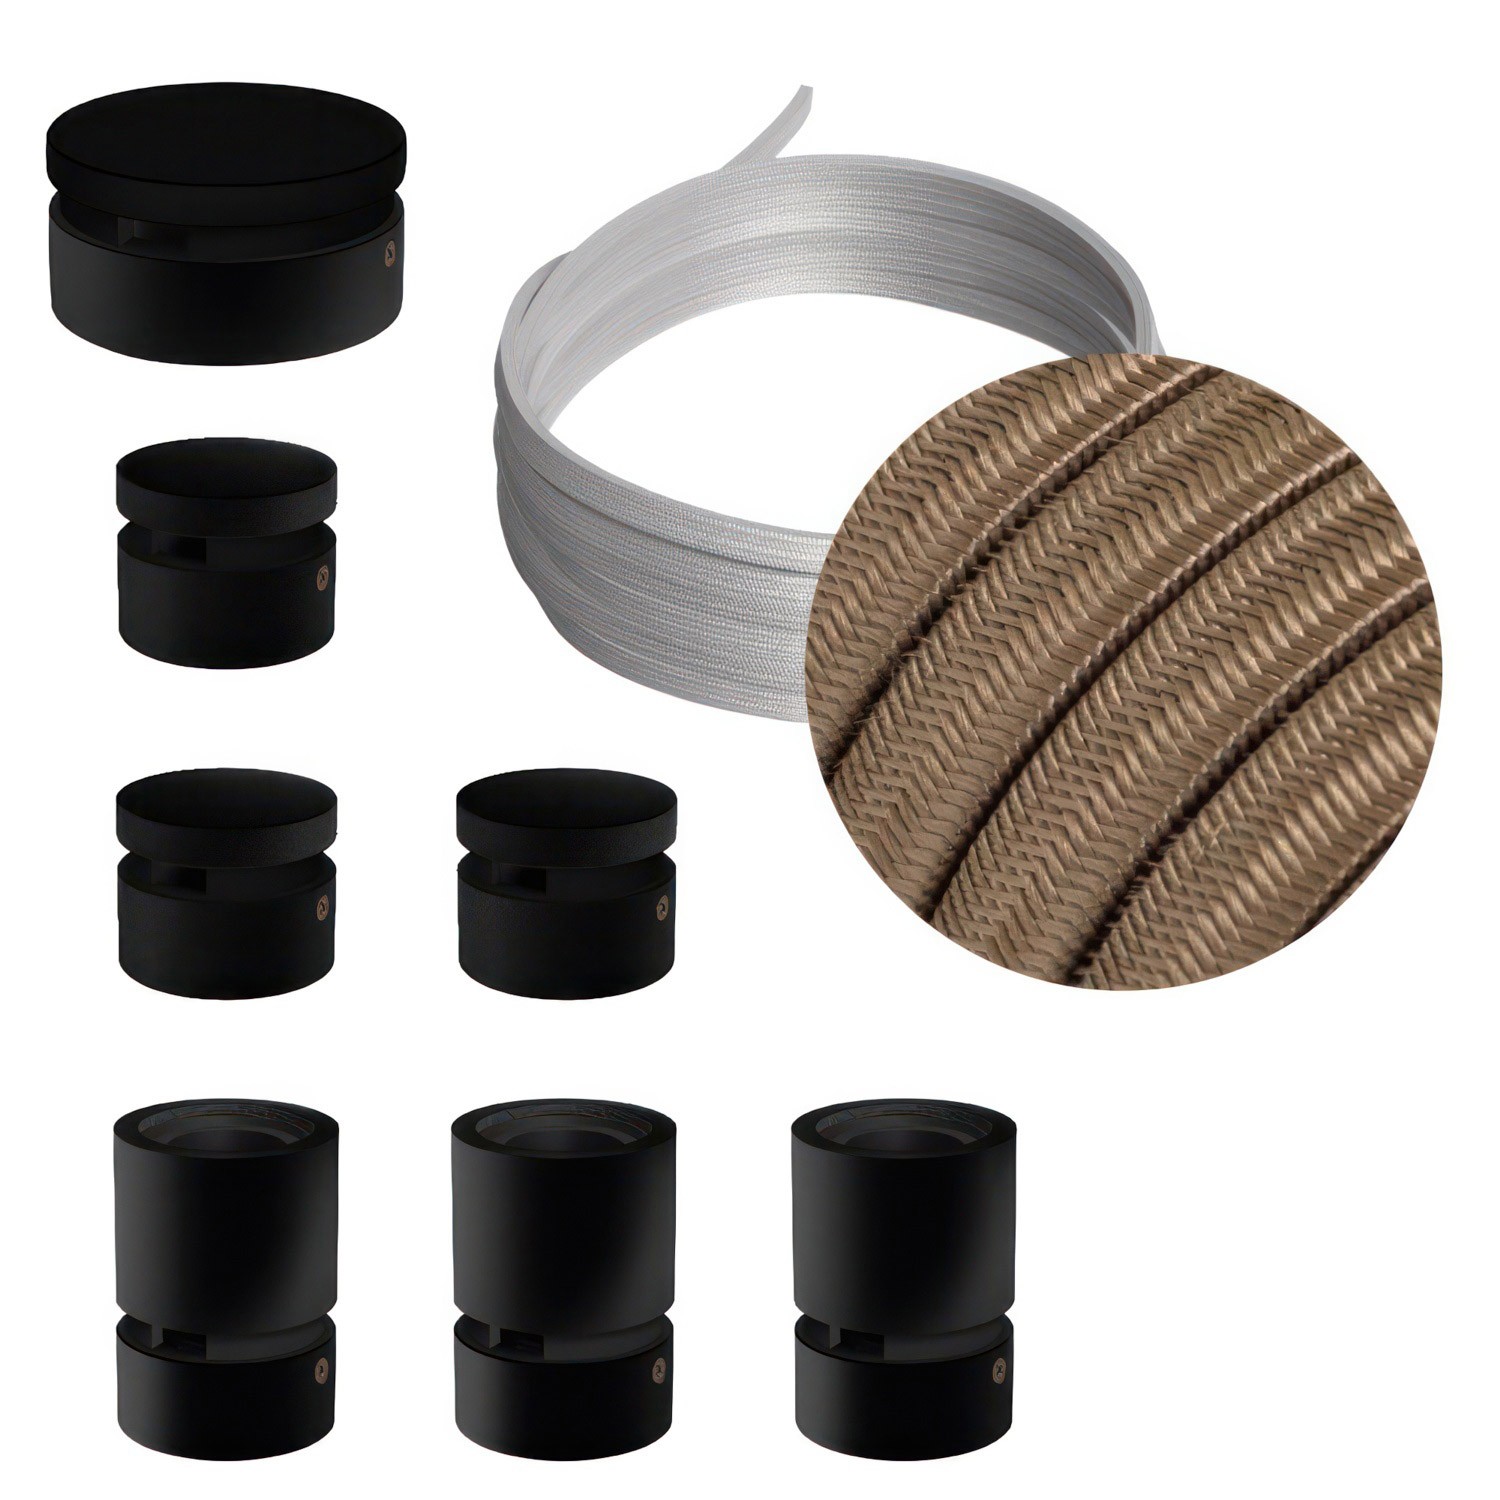 Kit Linear Filé System - con 5m cable textil guirnalda y 7 accesorios de madera pintados de negro